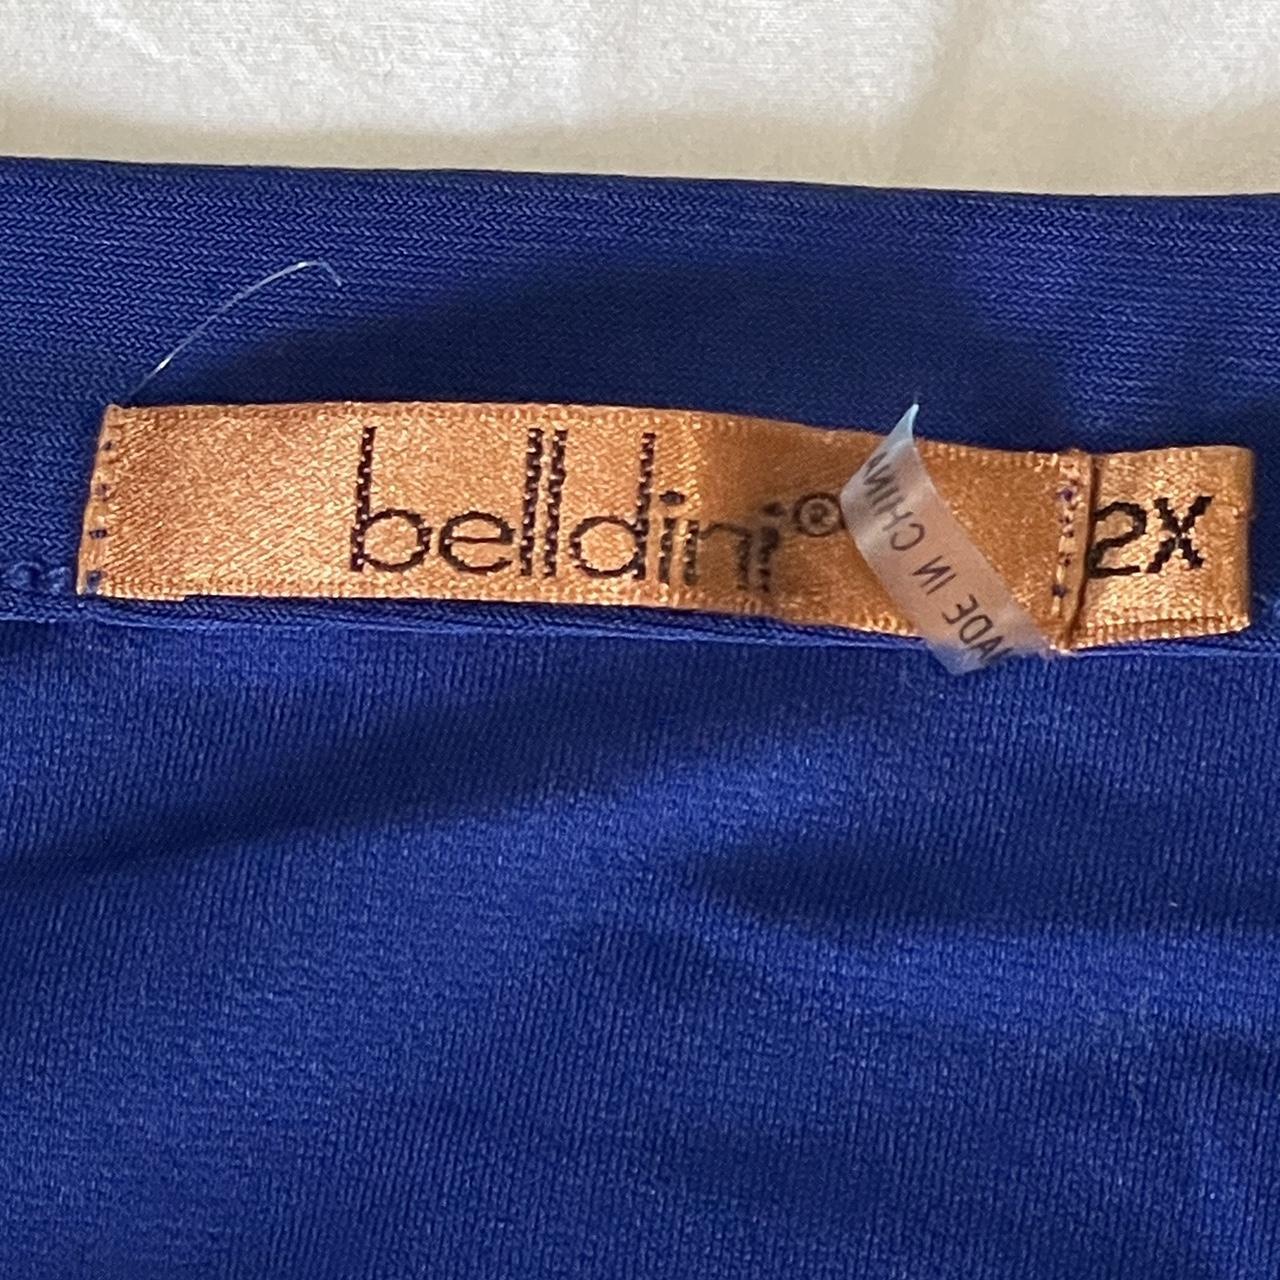 Belldini Women's Blouse (3)